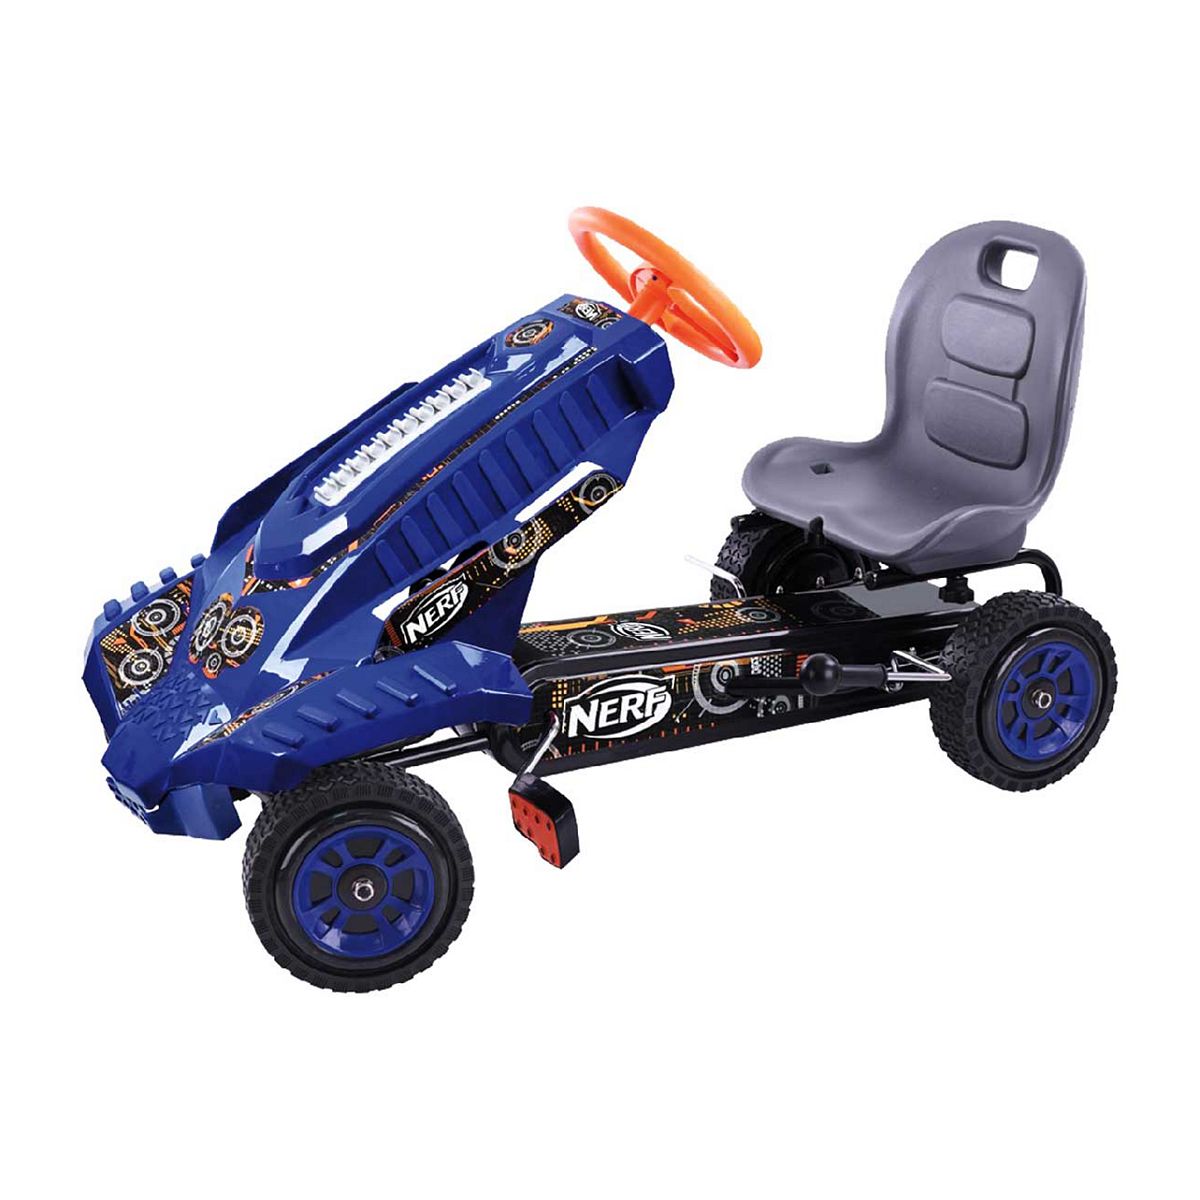 Hauck Nerf Striker Go Kart Toys & Kid's Zone Boots   